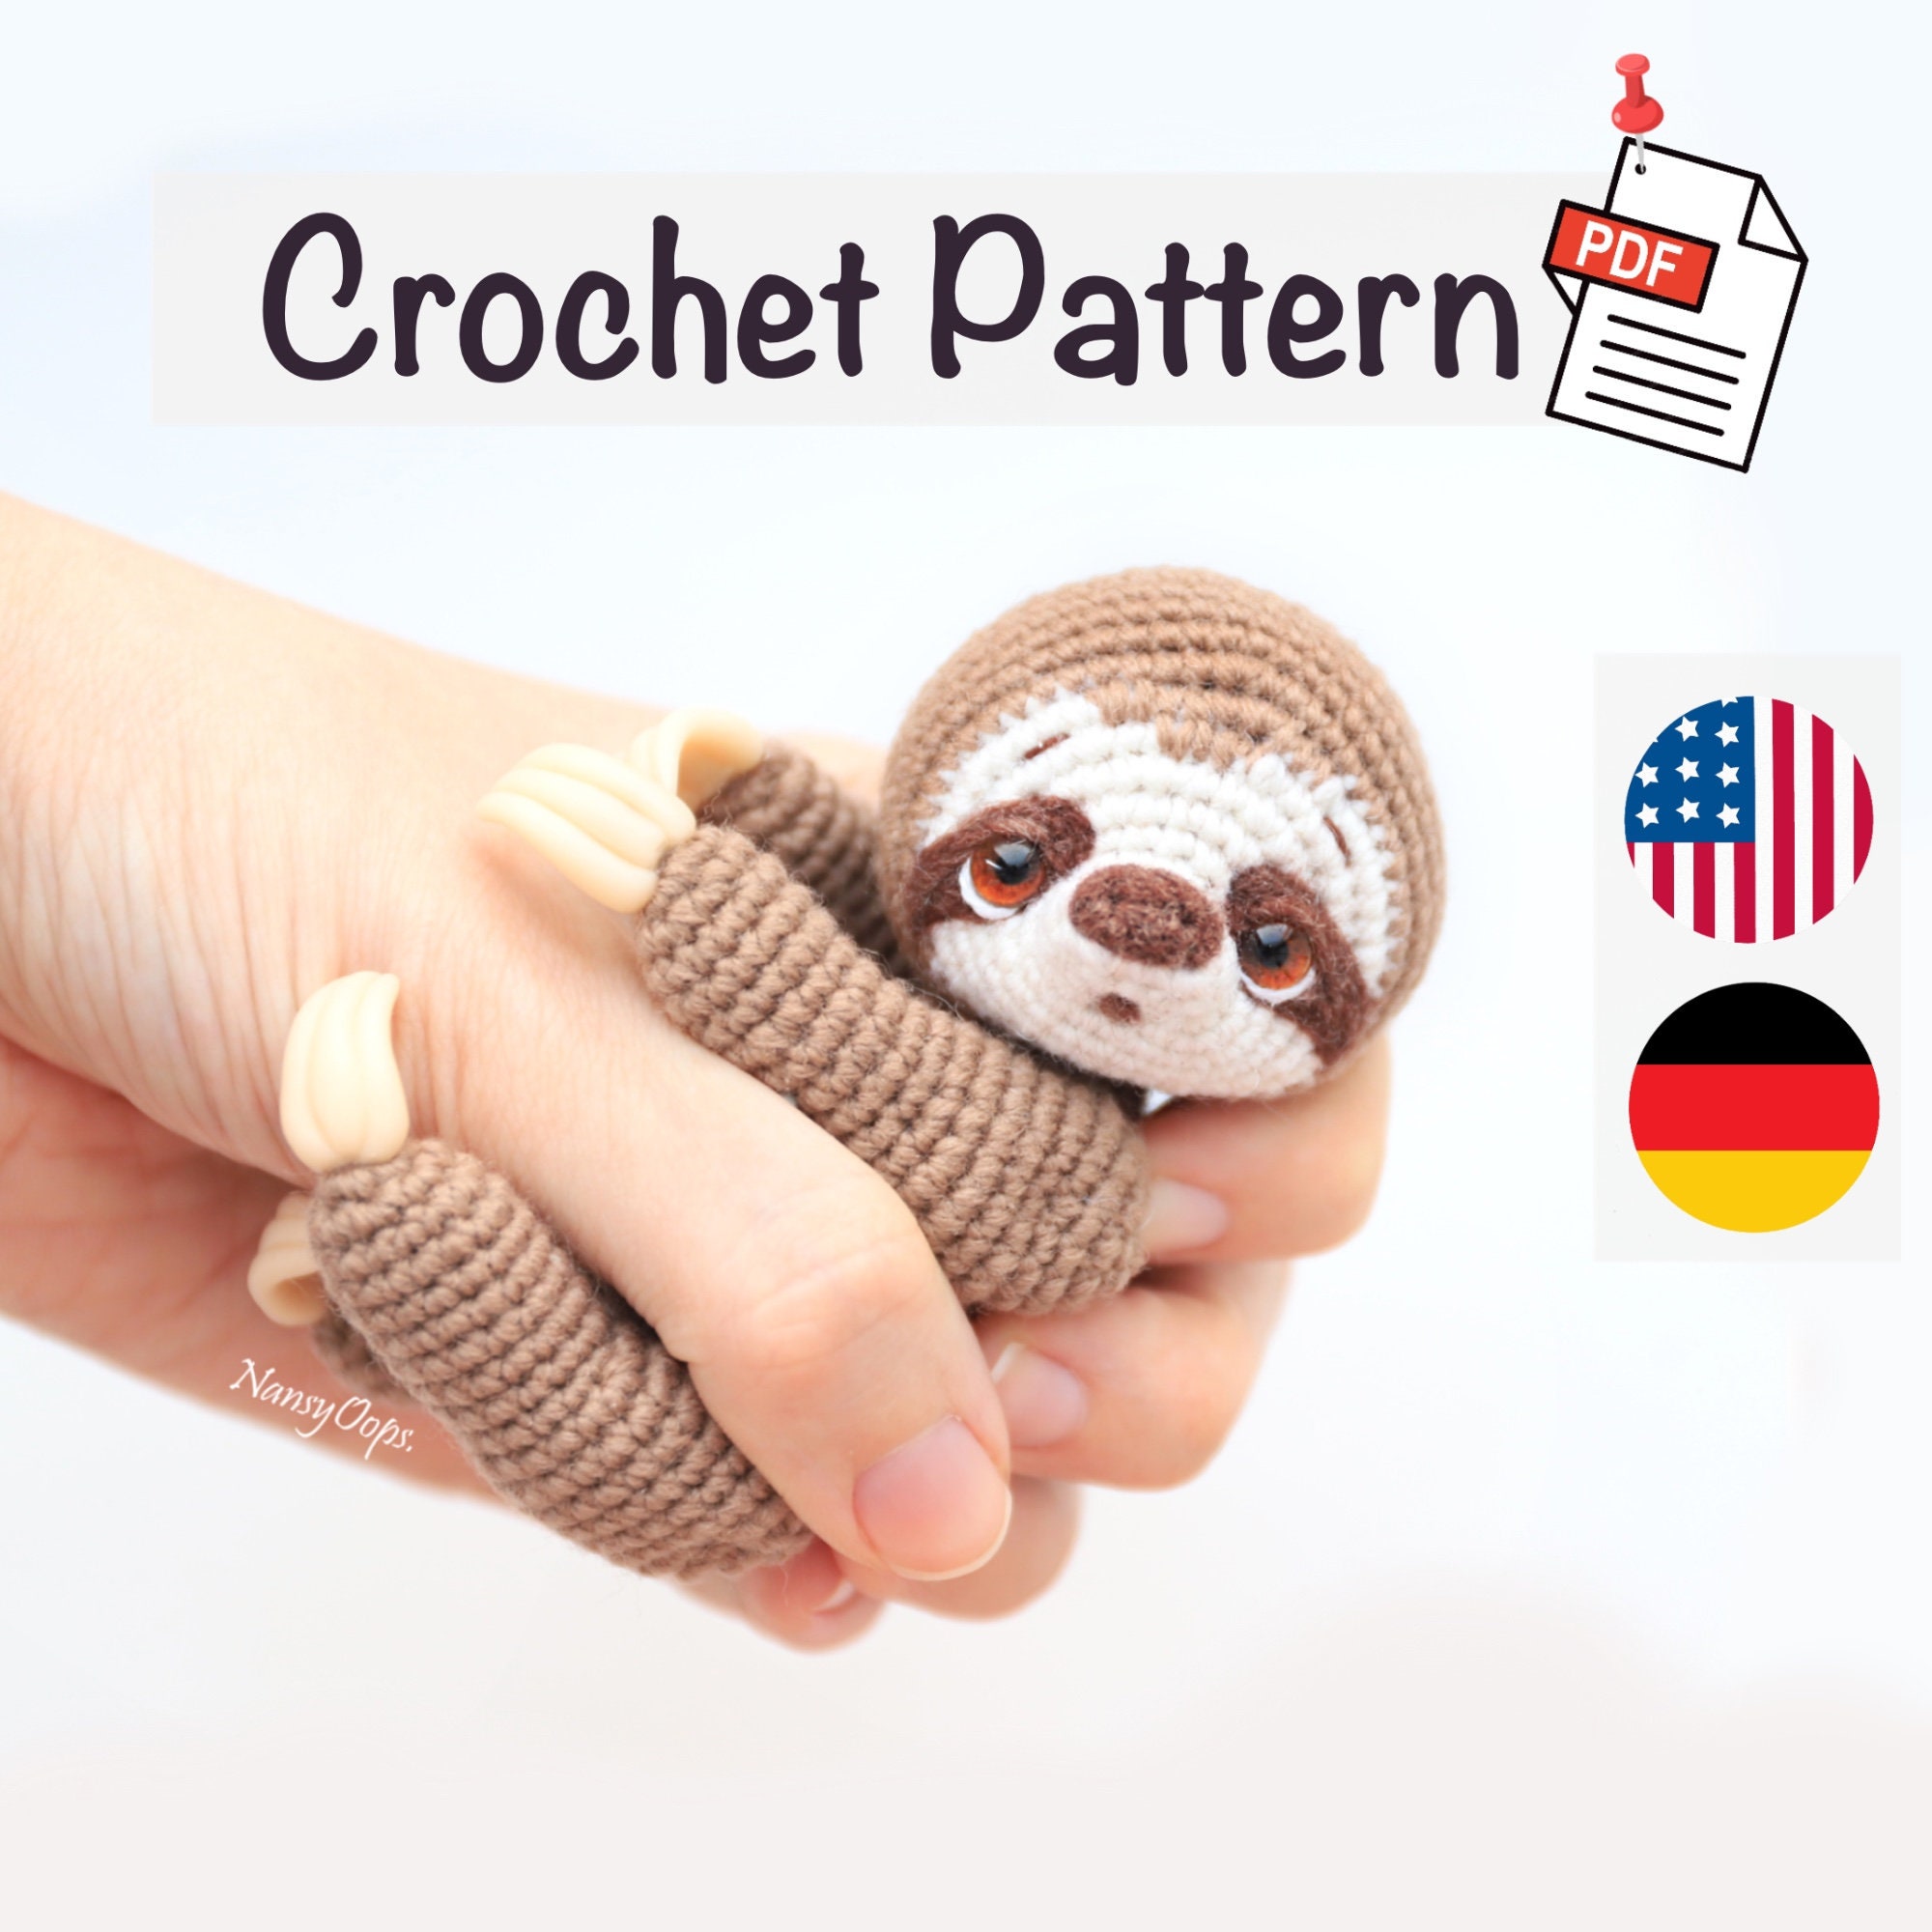 DIY Sloth Crochet Kit